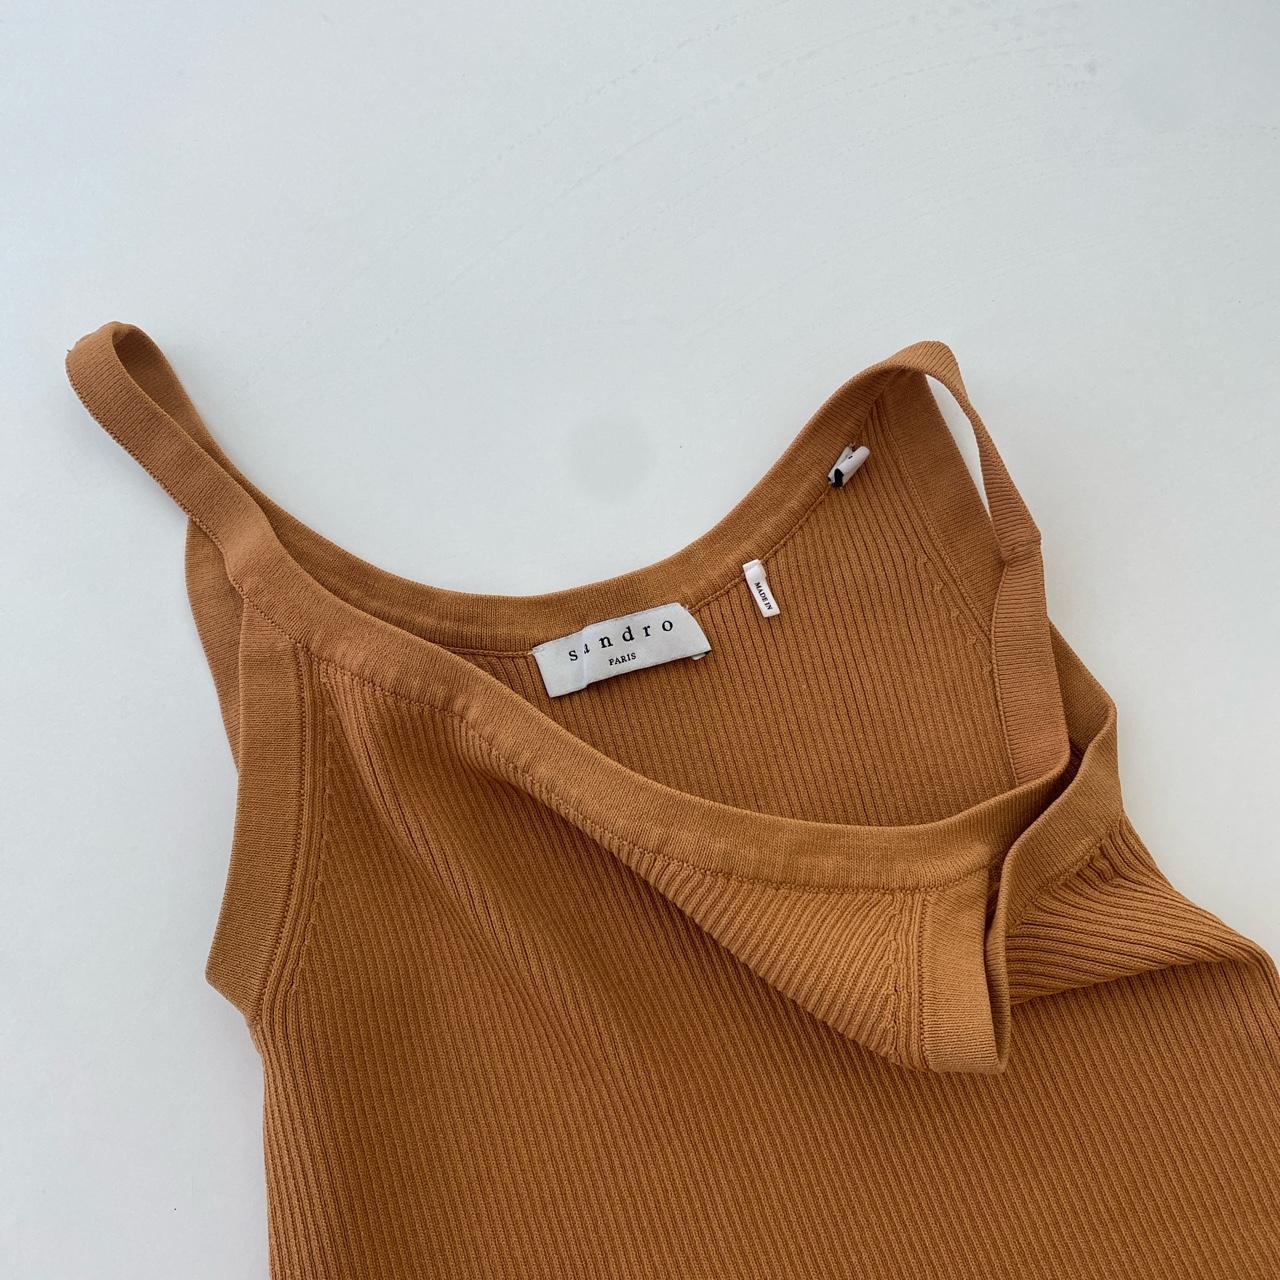 Sandro Women's Brown and Orange Vest